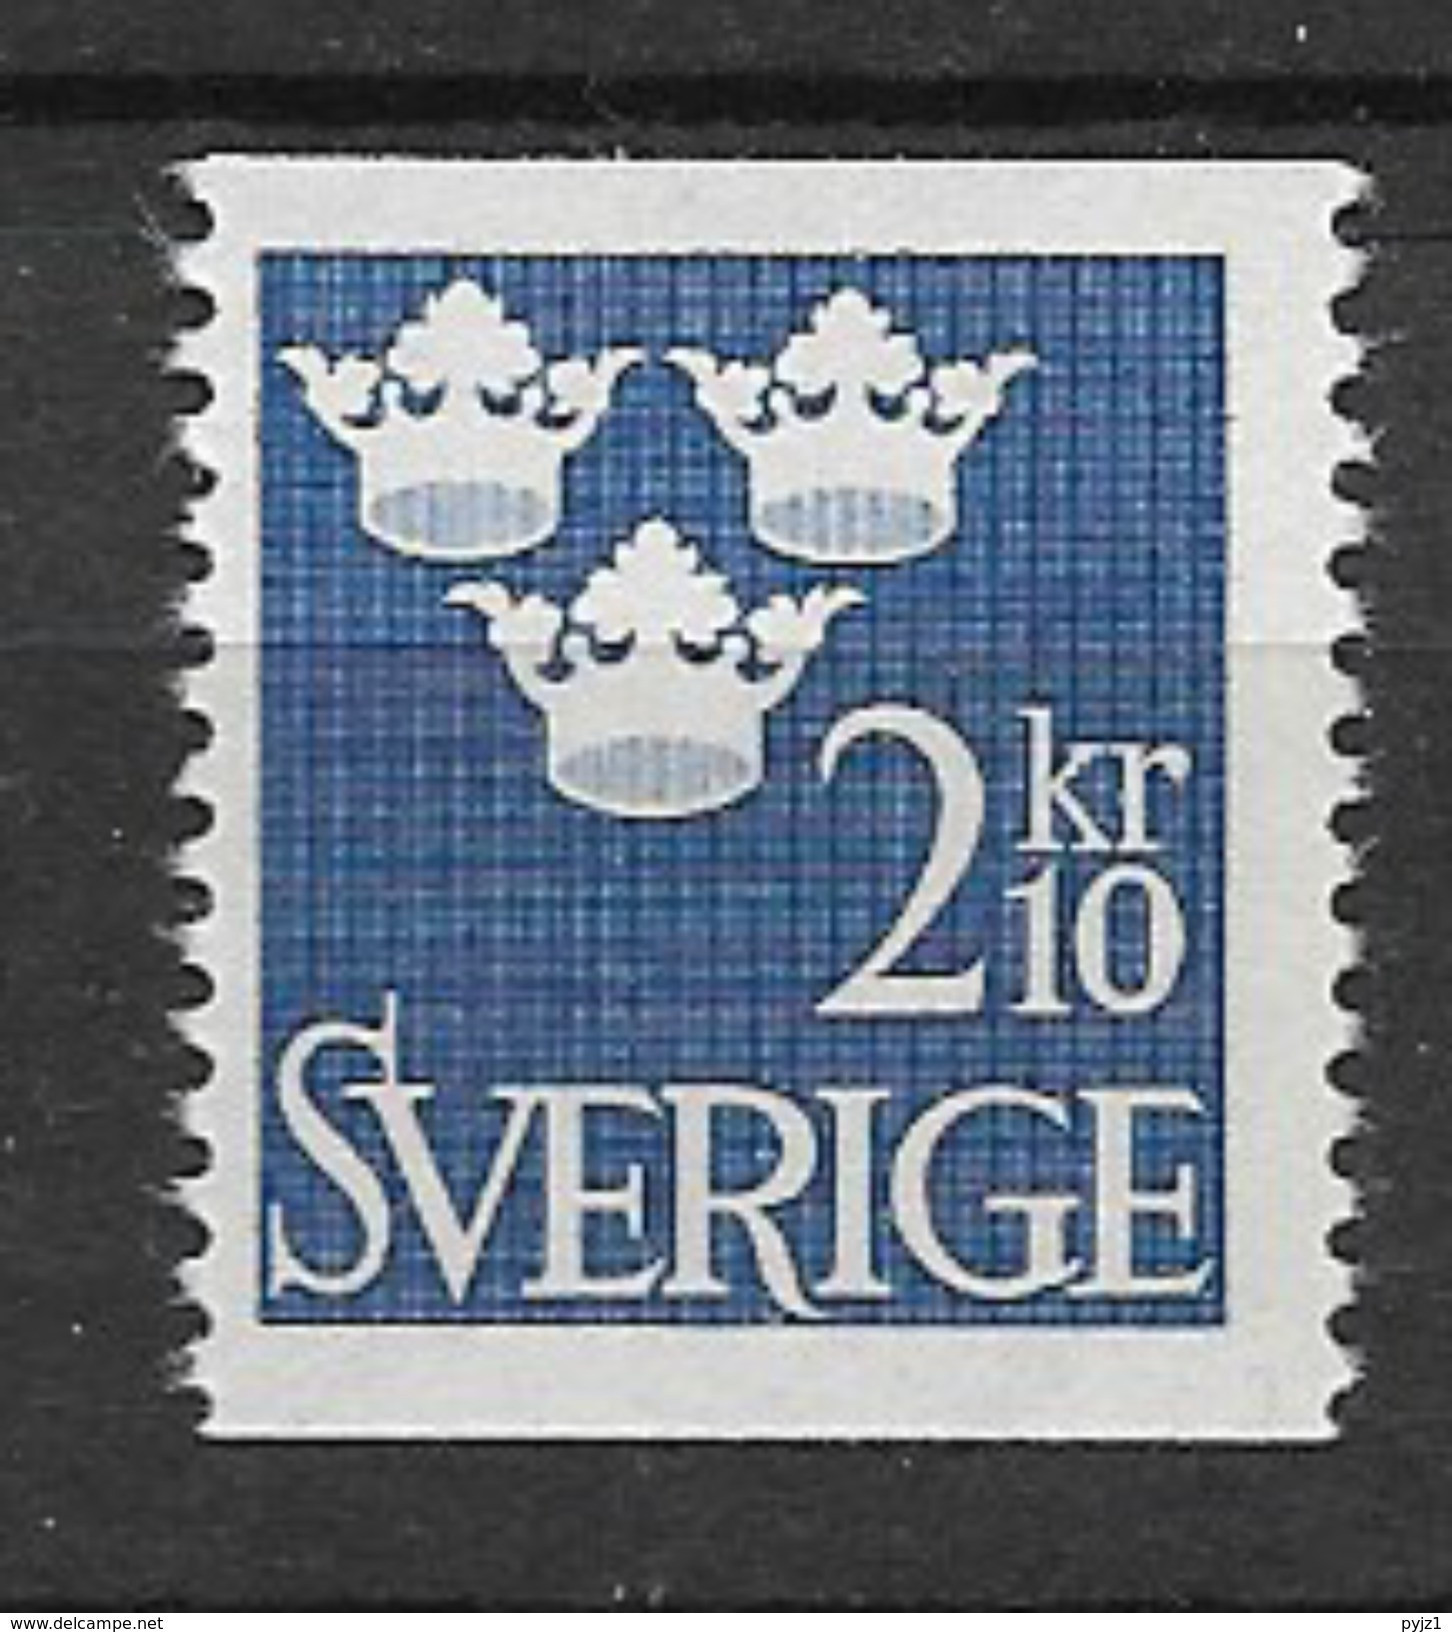 1939-69 MNH  Sweden, 3-crowns  Postfris** - Nuovi